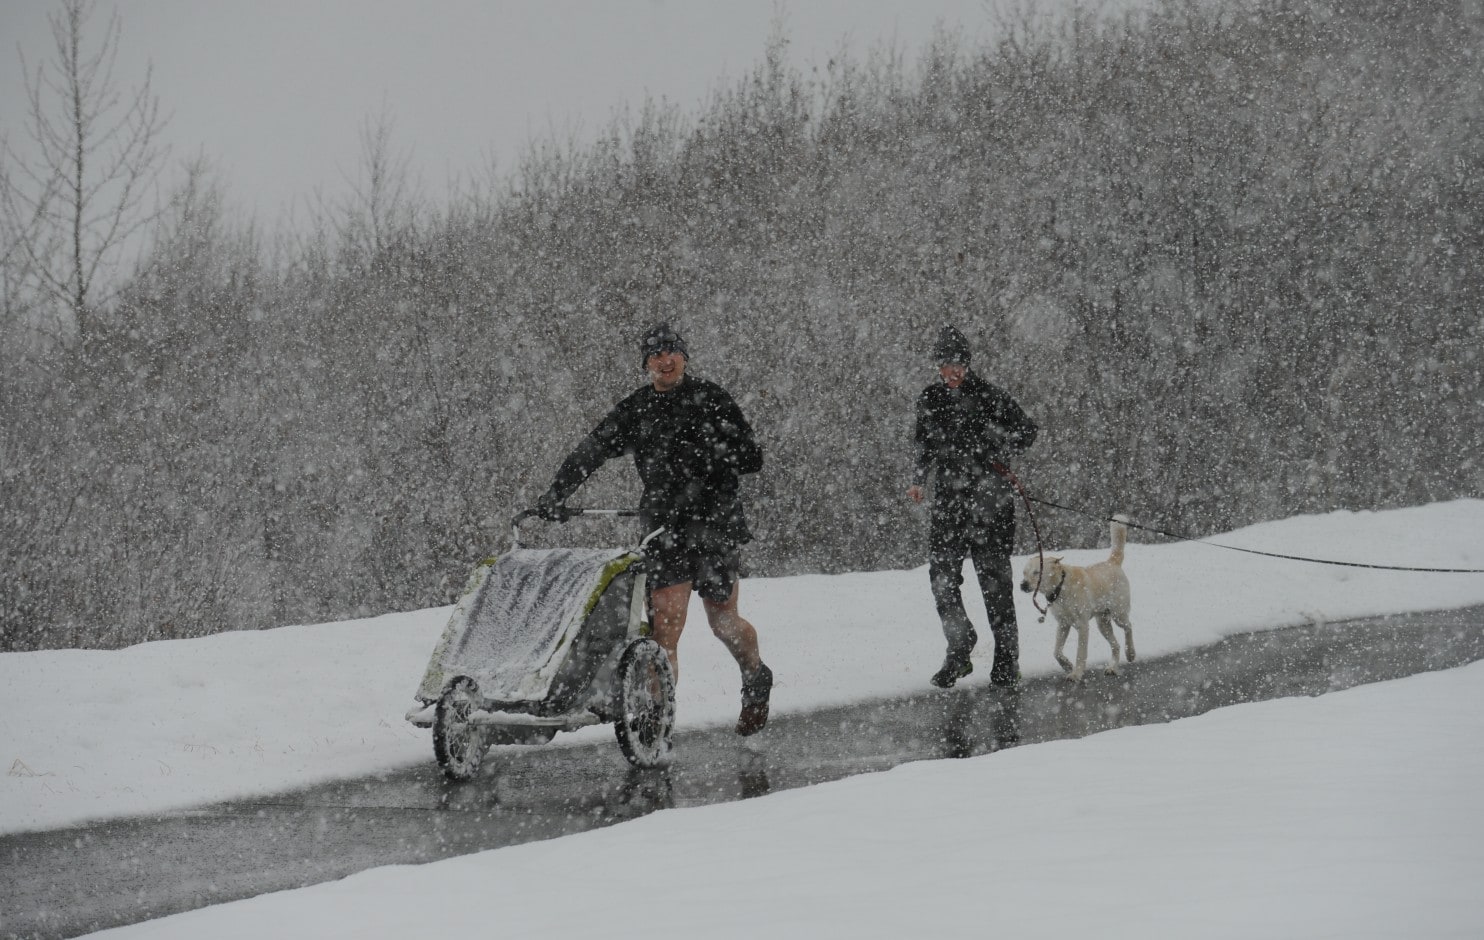 alaska recreational snow weather ski alert record